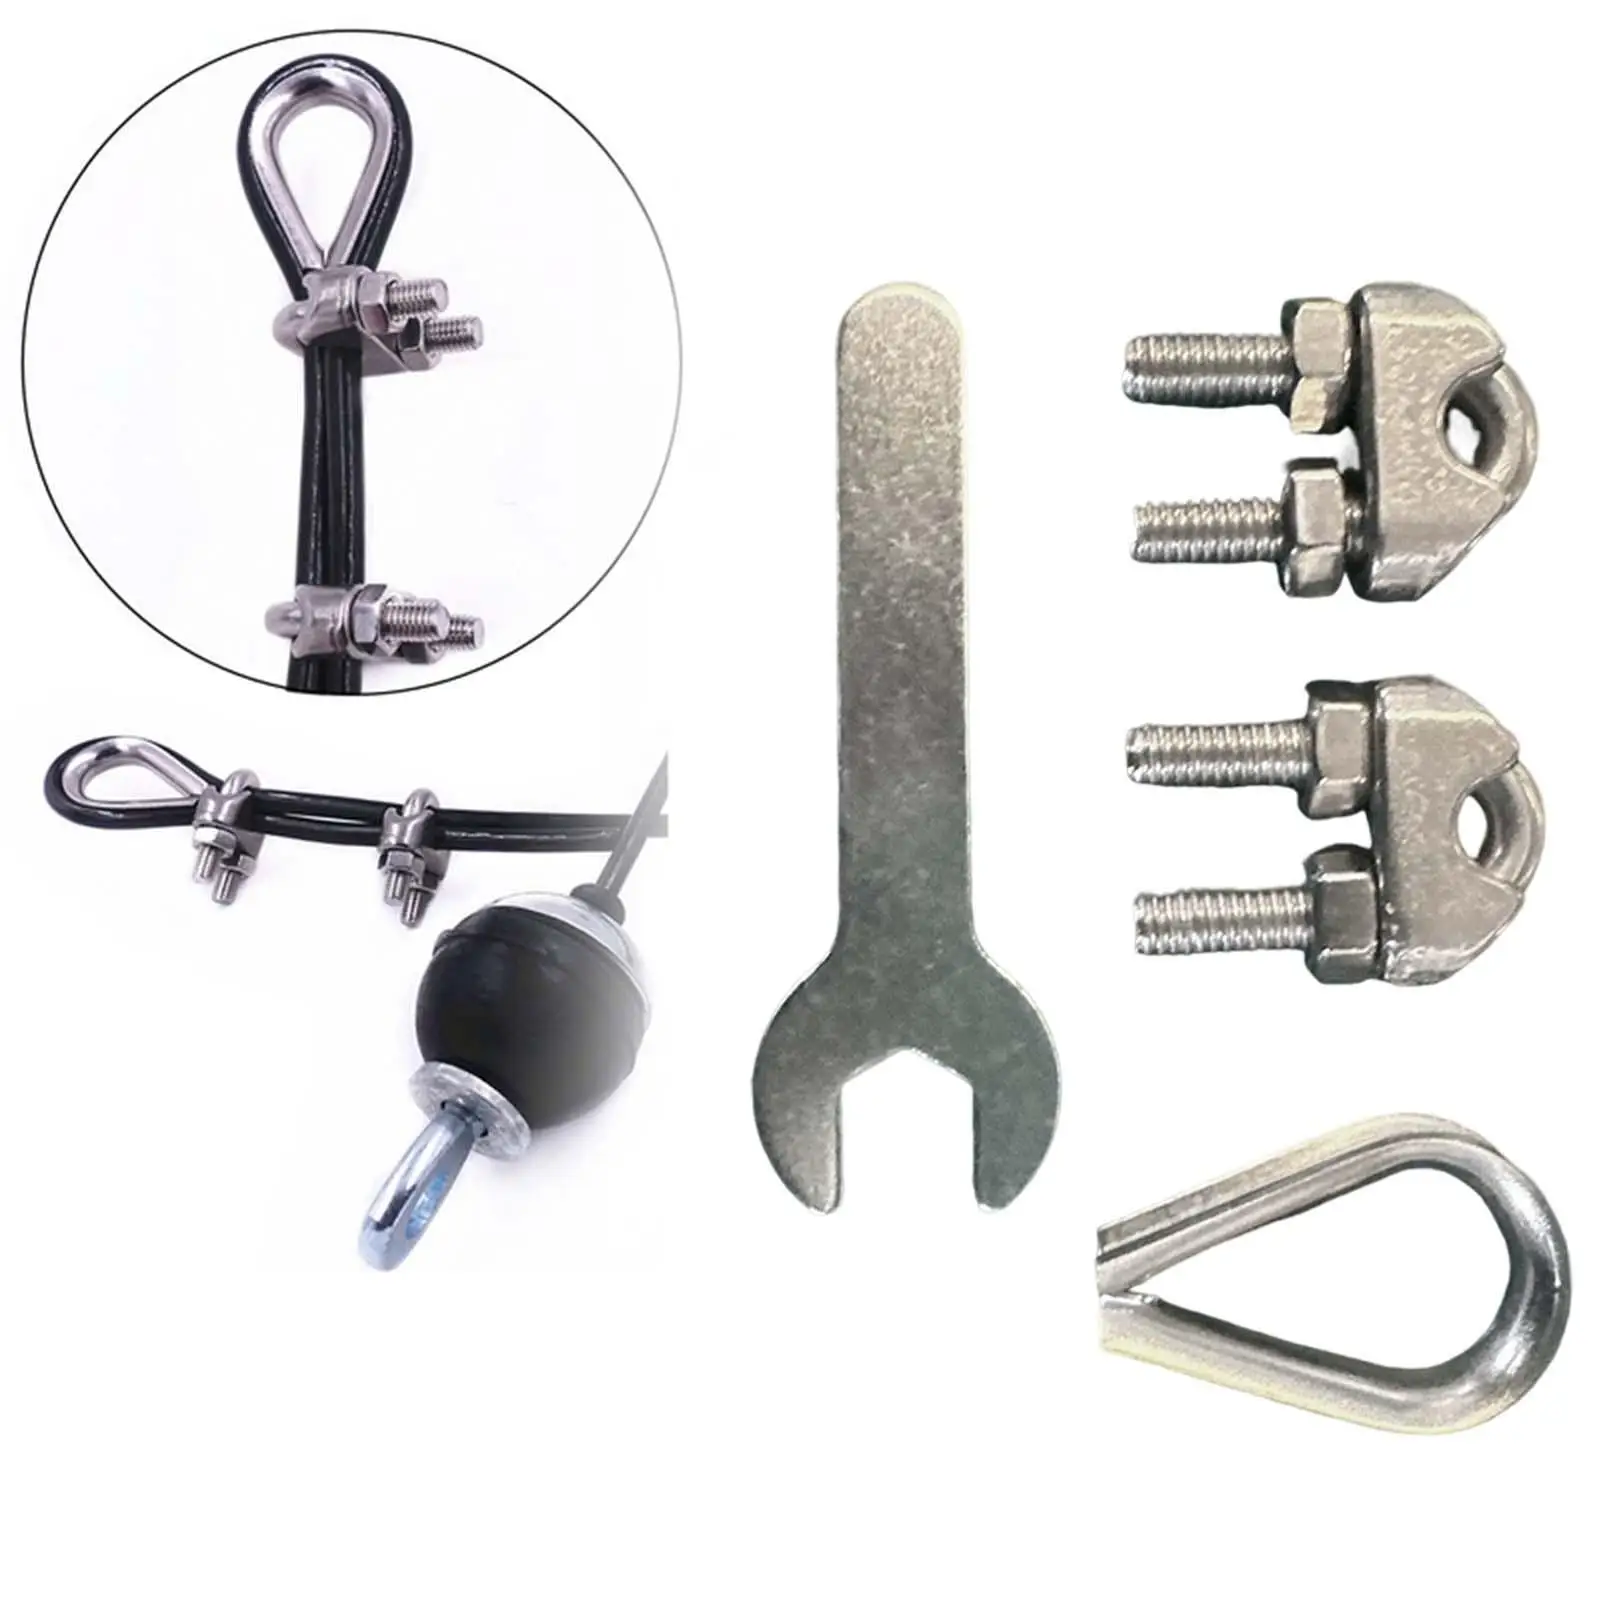 Wire Rope Locks Accessories Set Equipment Accessories DIY Exercise Accessories